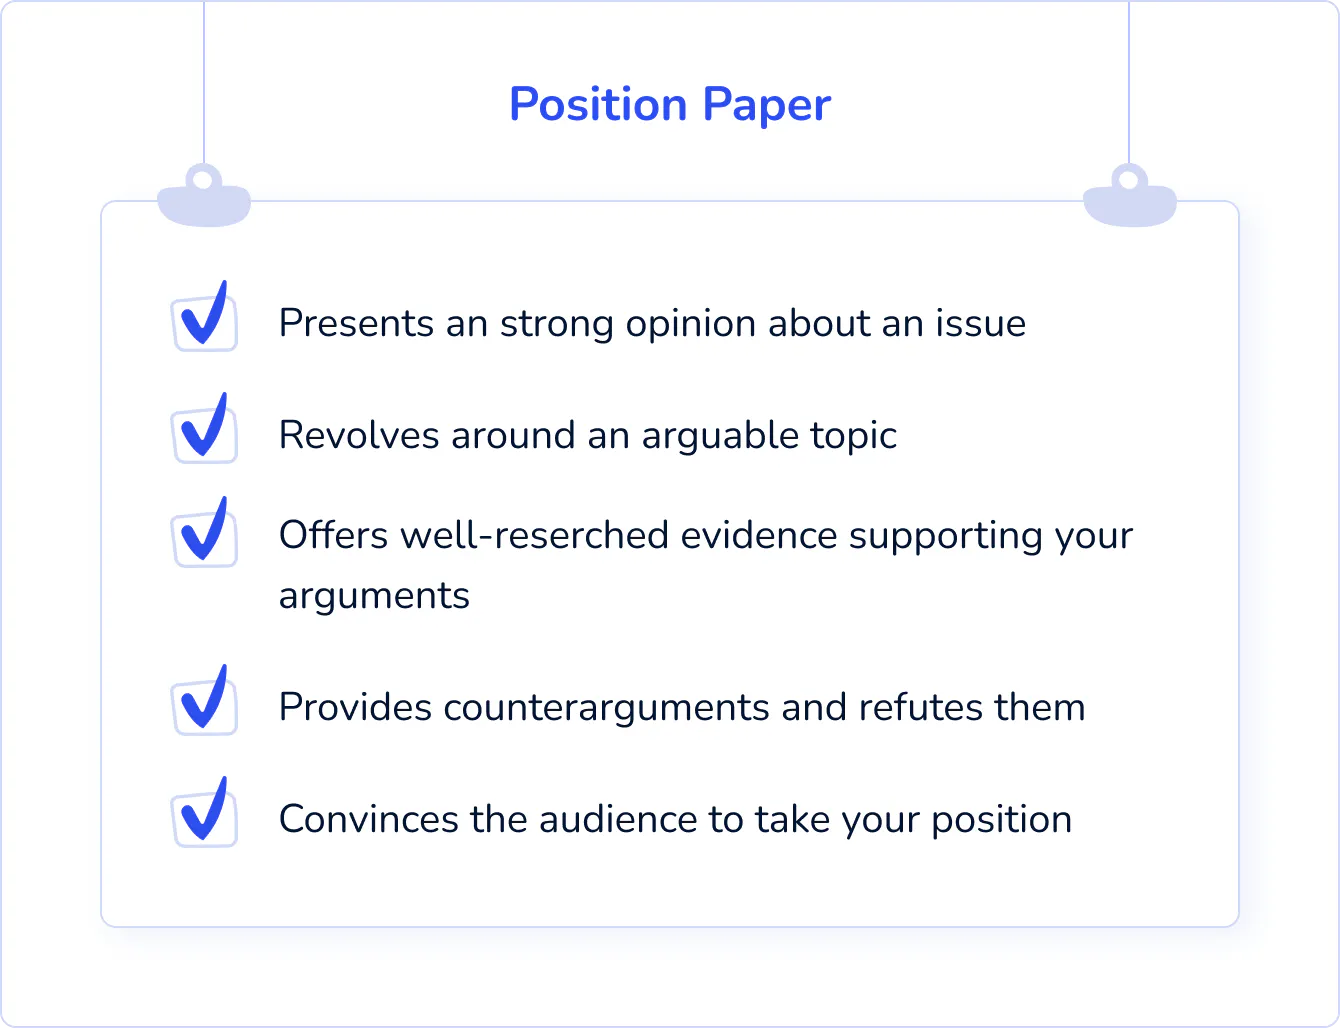 Position Paper Characteristics